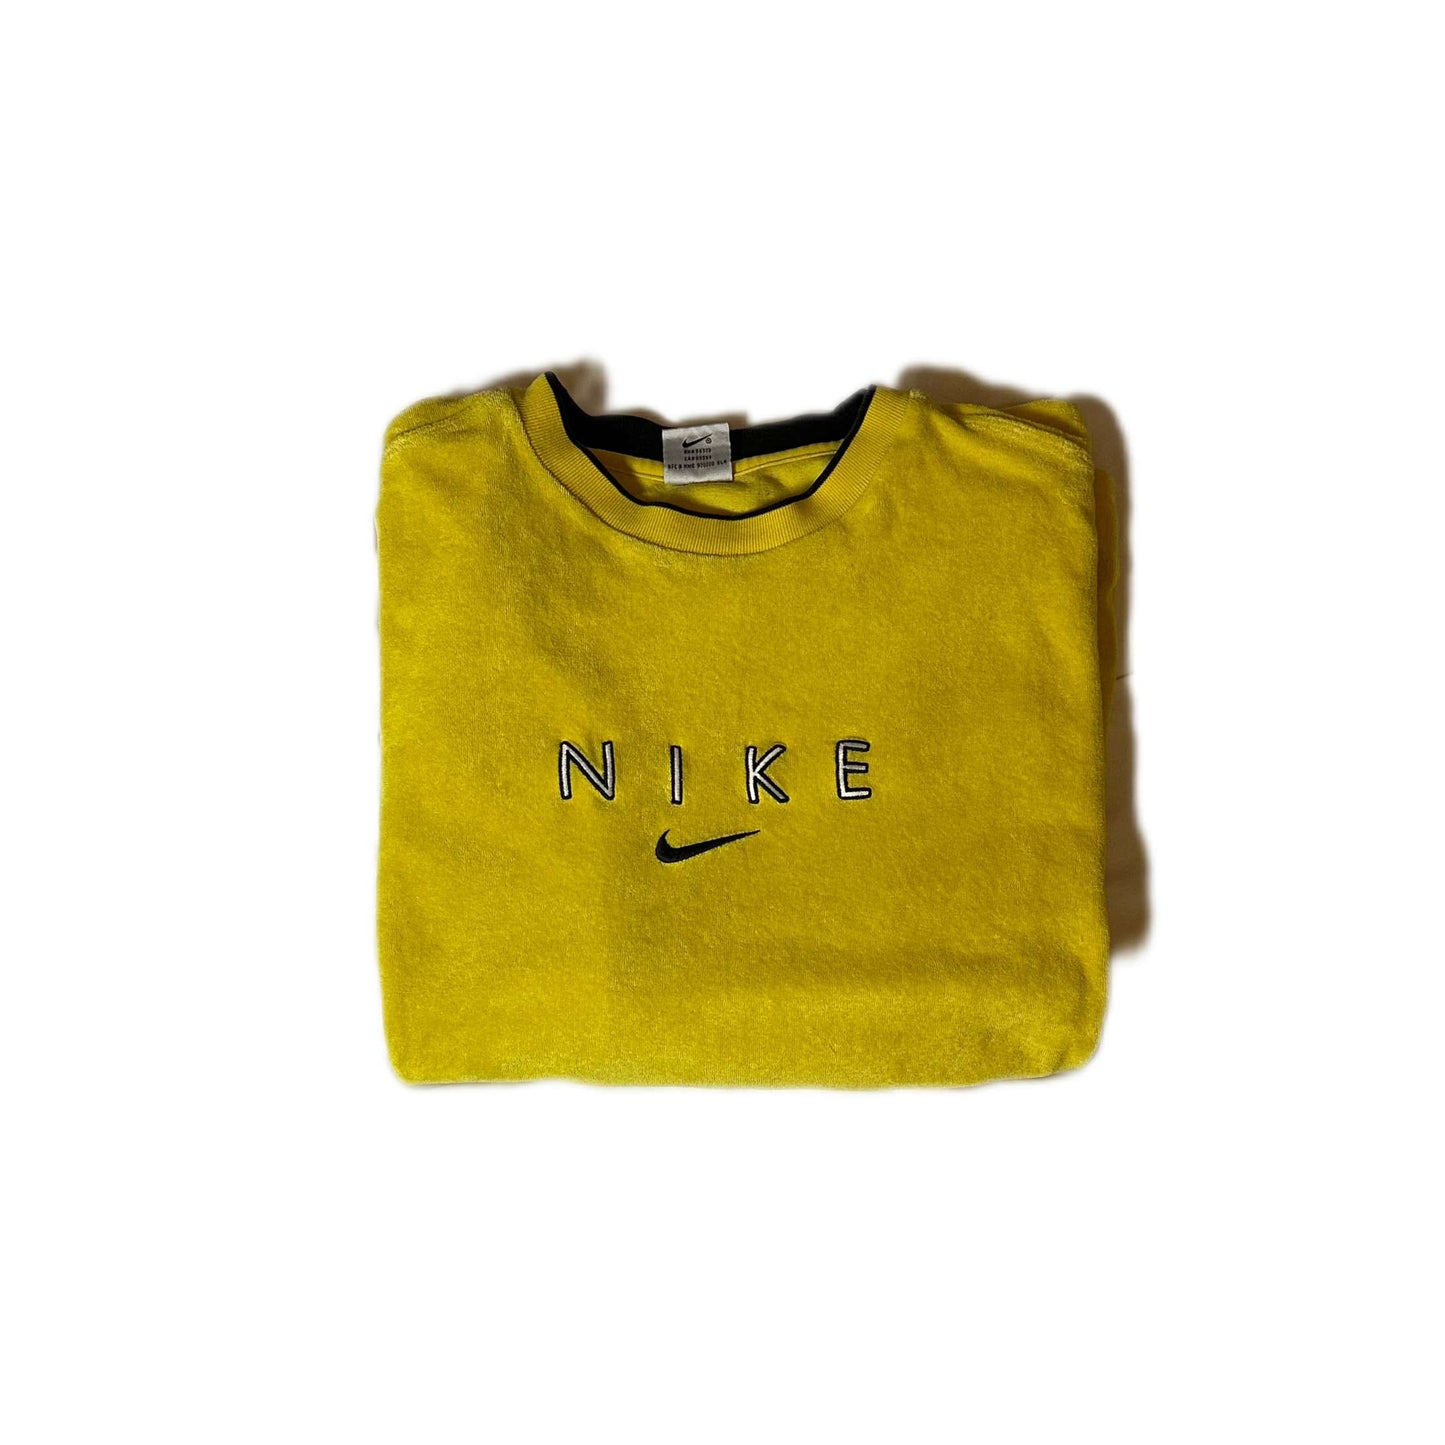 Nike vintage sweater yellow